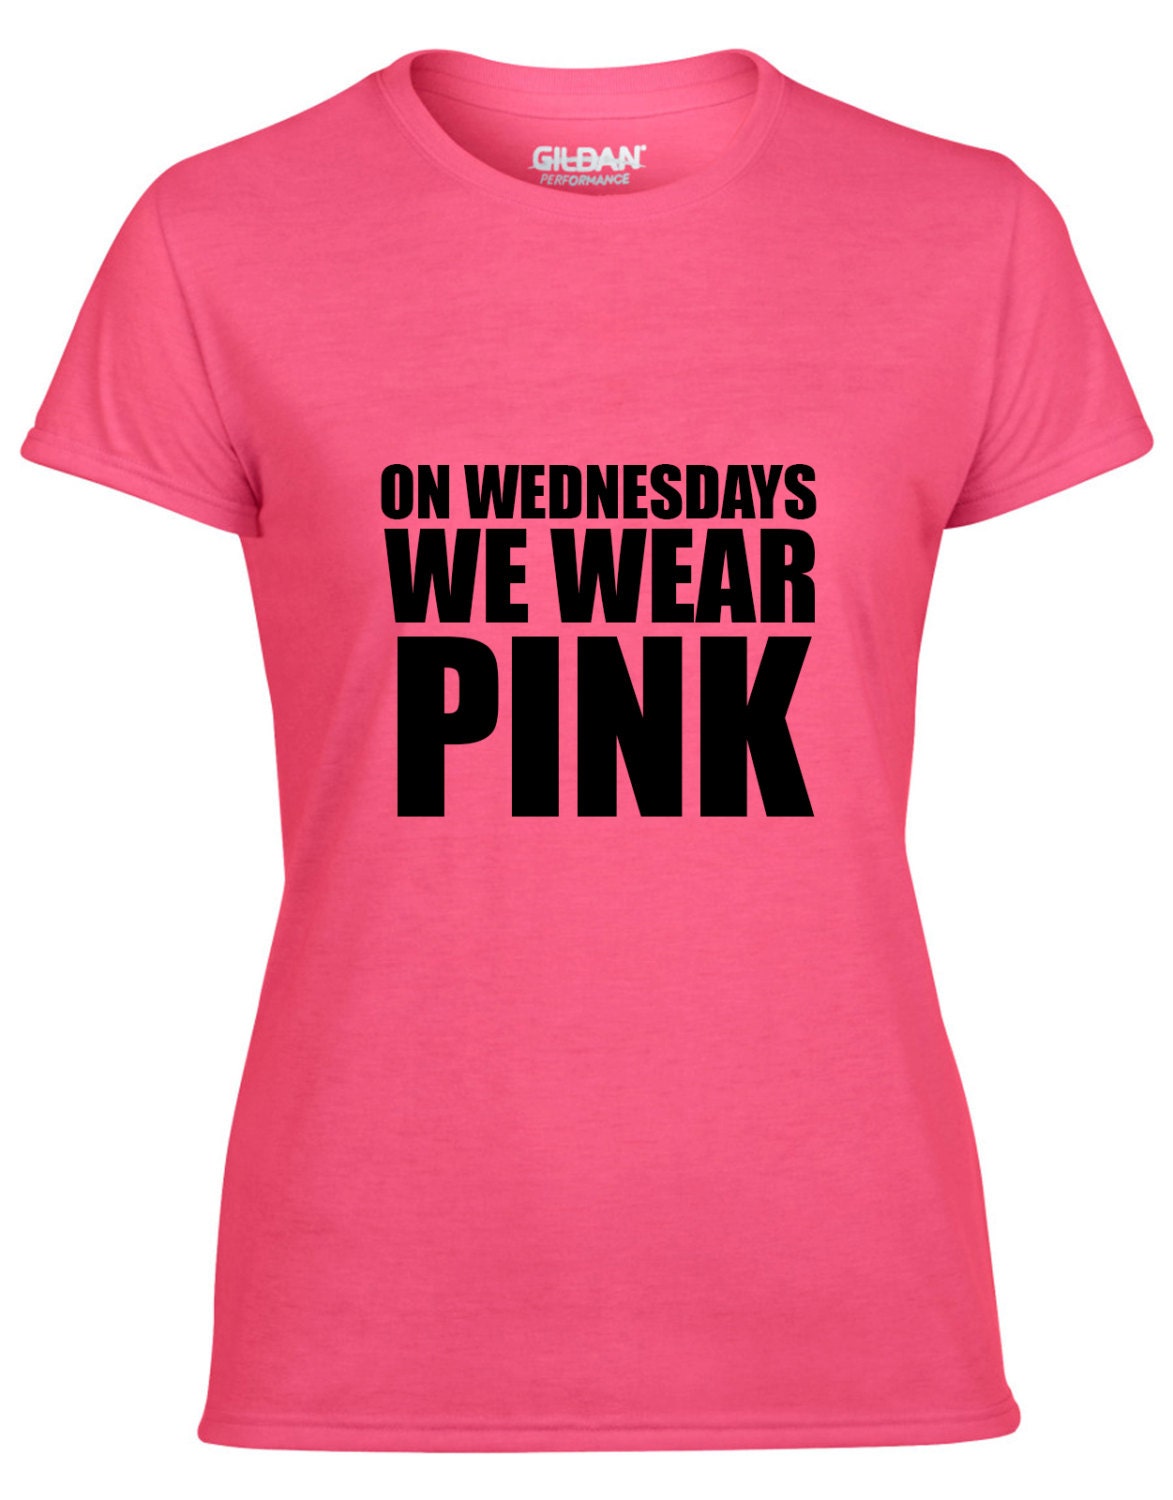 On Wednesdays We Wear Pink Ladies T-Shirt